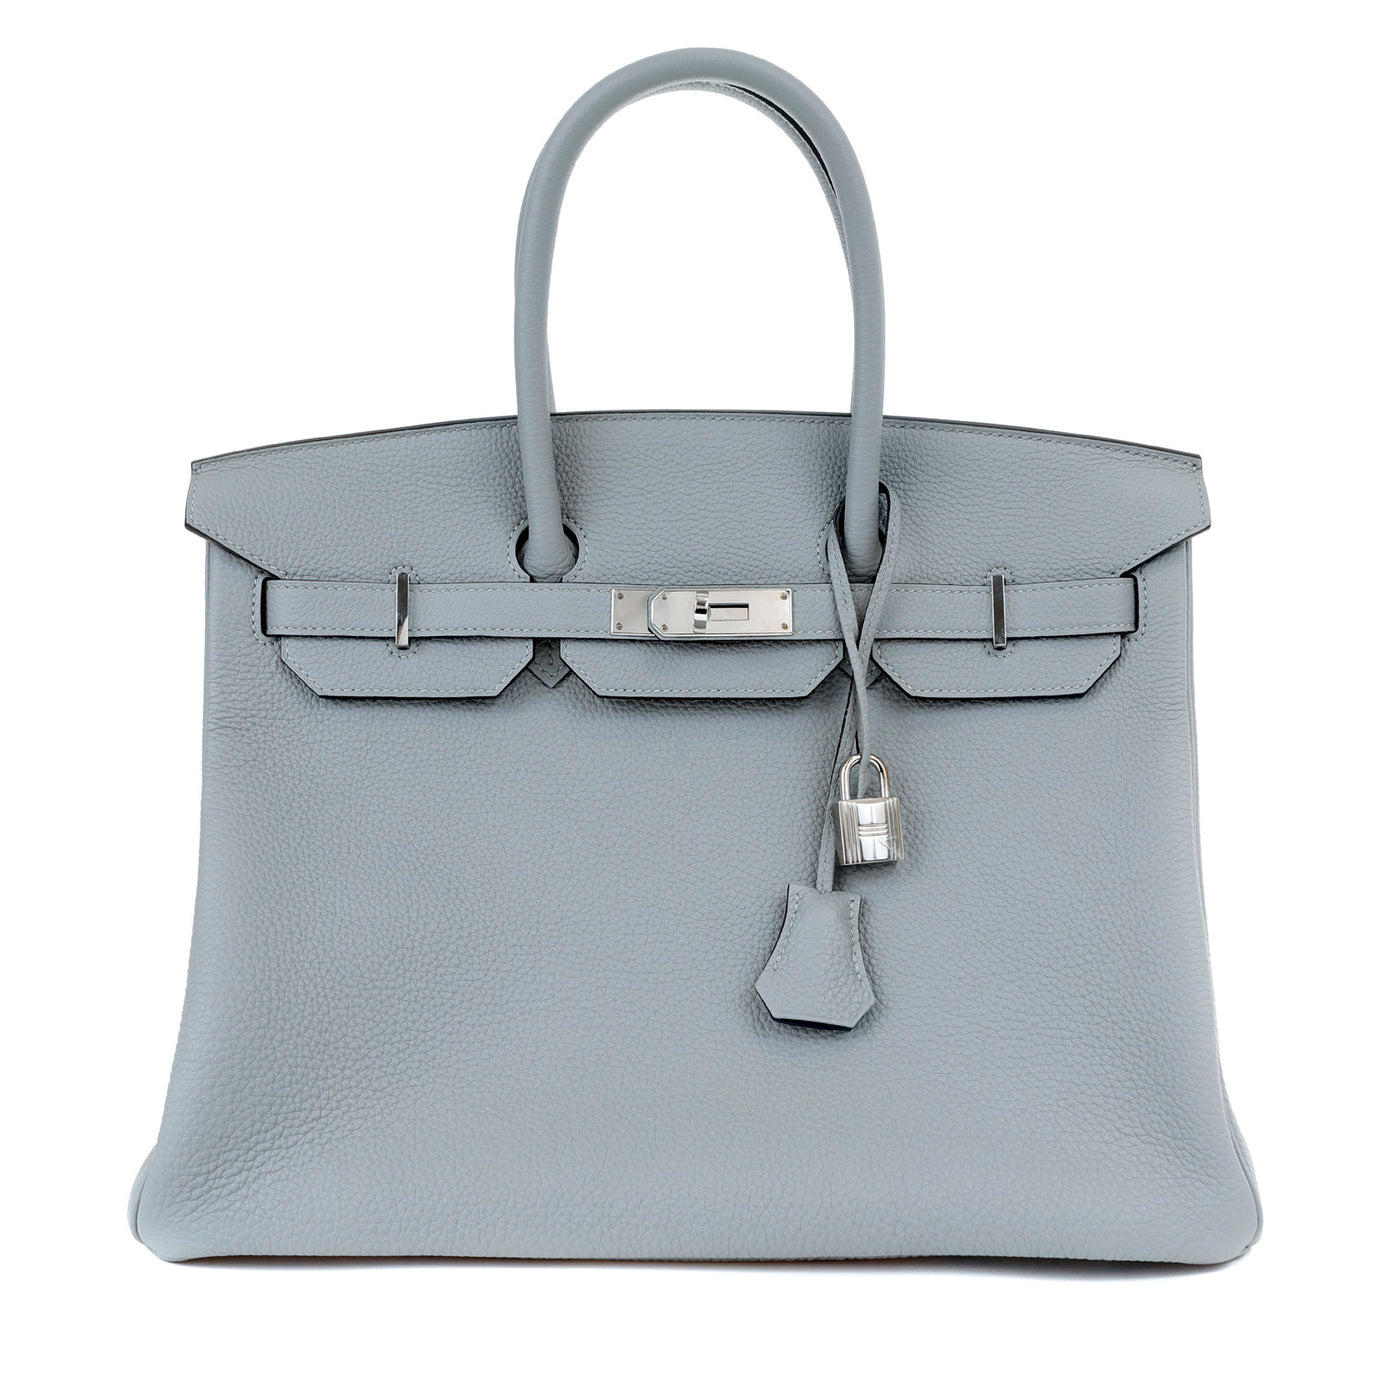 This stunning Hermès 35 cm Grey Togo Birkin Bag is a true representation of luxury and craftsmanship